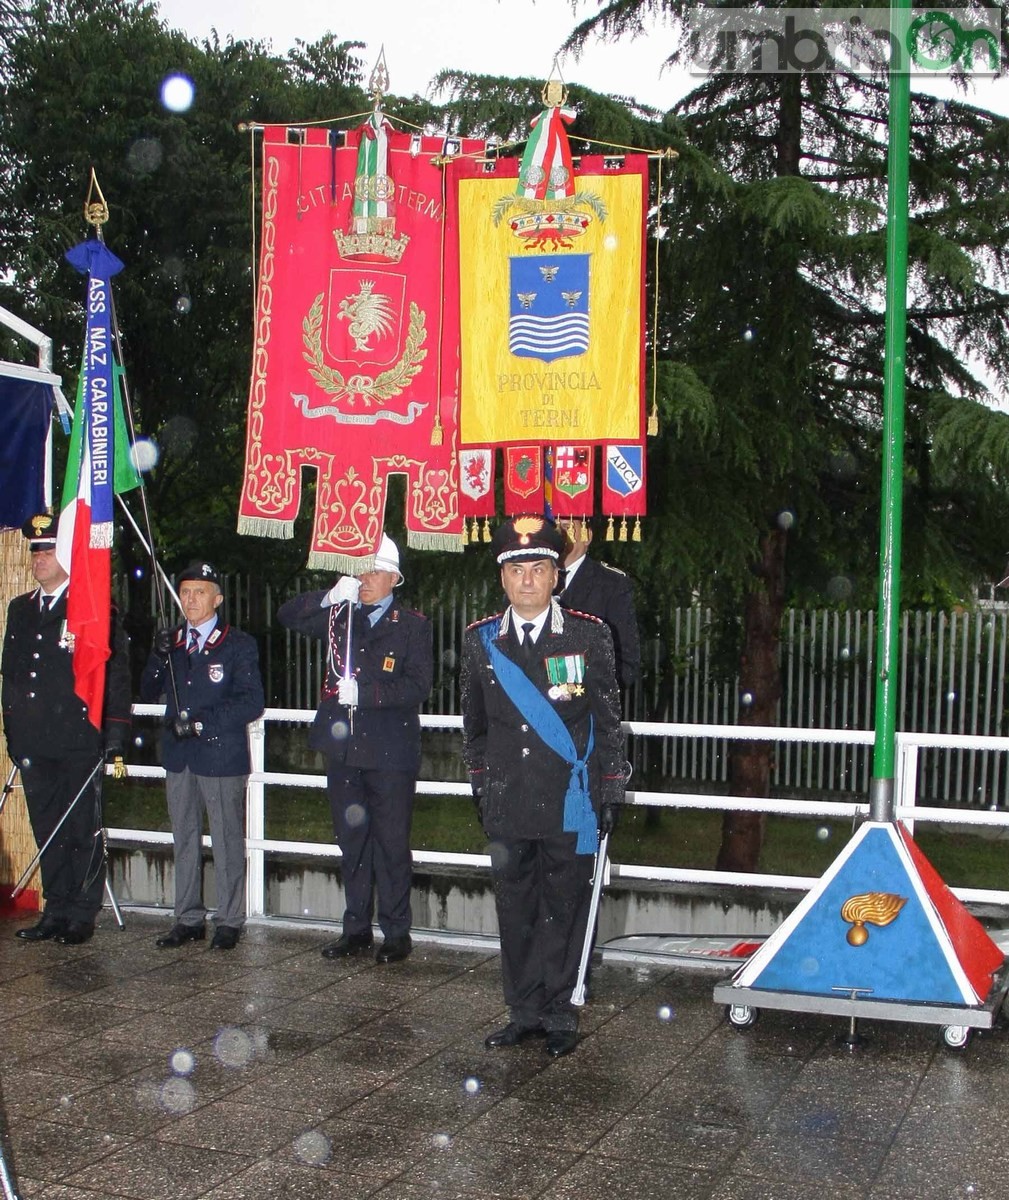 Festa 202° anniversario Carabinieri, Terni - 6 giugno 2016 (10)